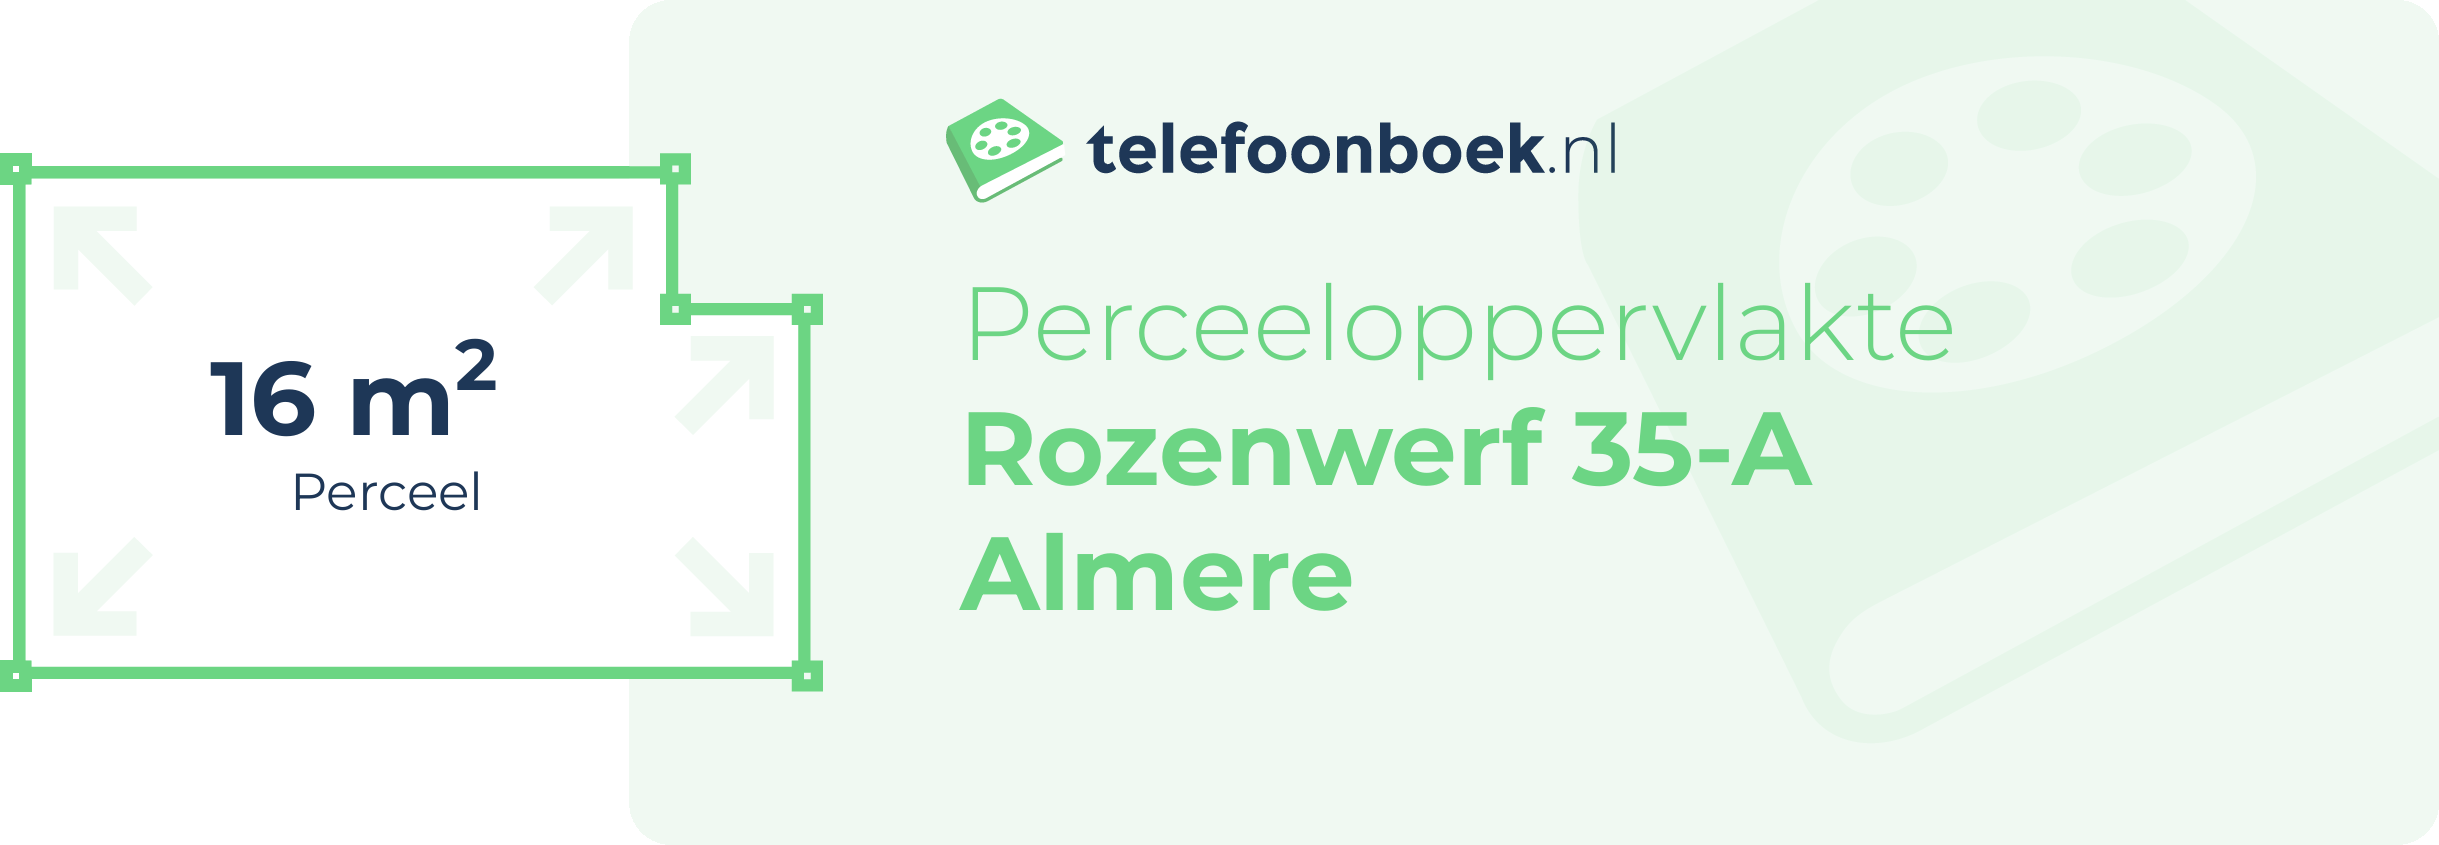 Perceeloppervlakte Rozenwerf 35-A Almere